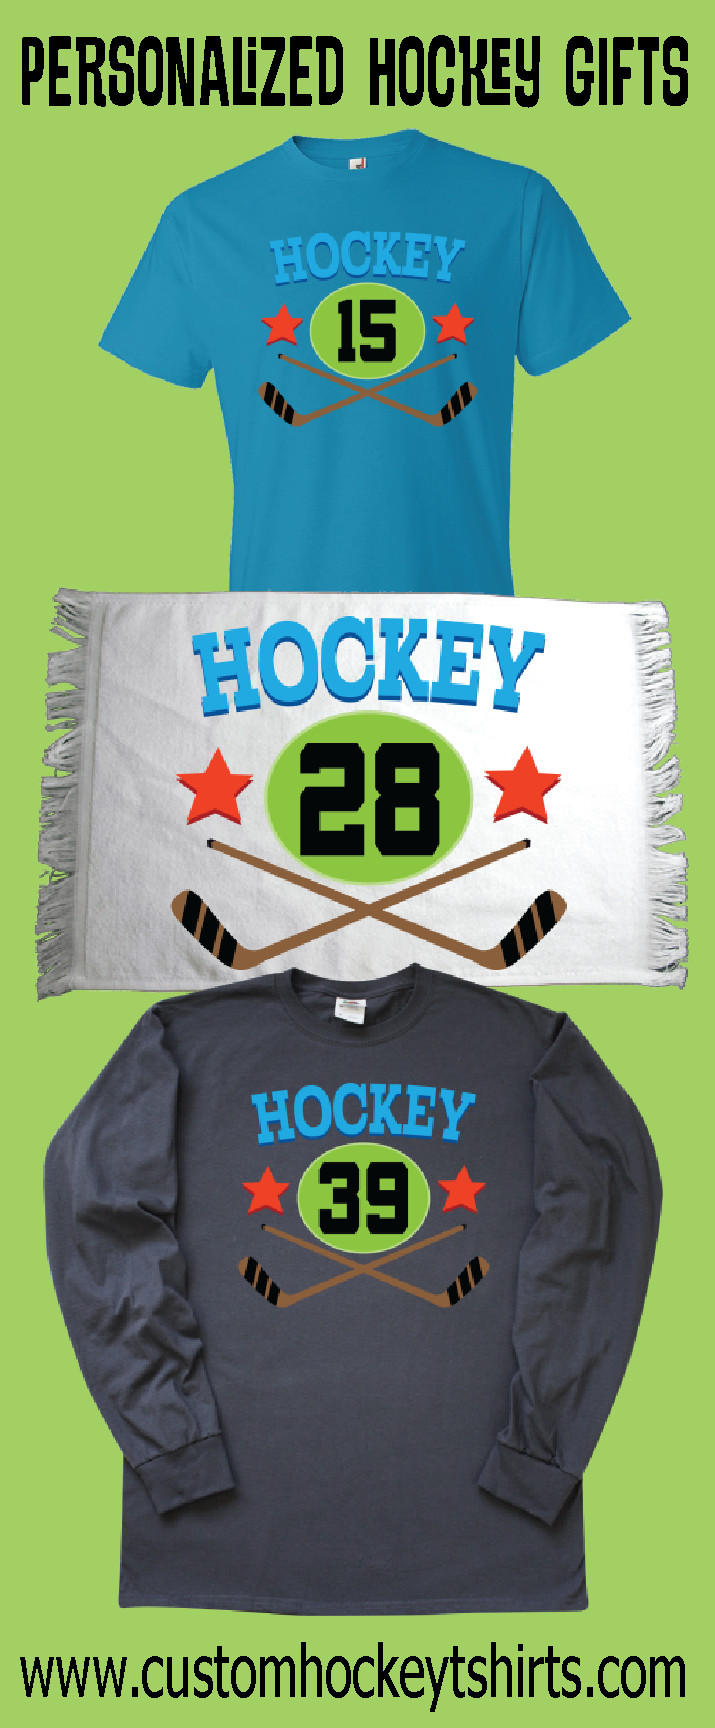 Hockey Gift Ideas For Boyfriend
 Personalized Hockey ts tomhockeytshirts